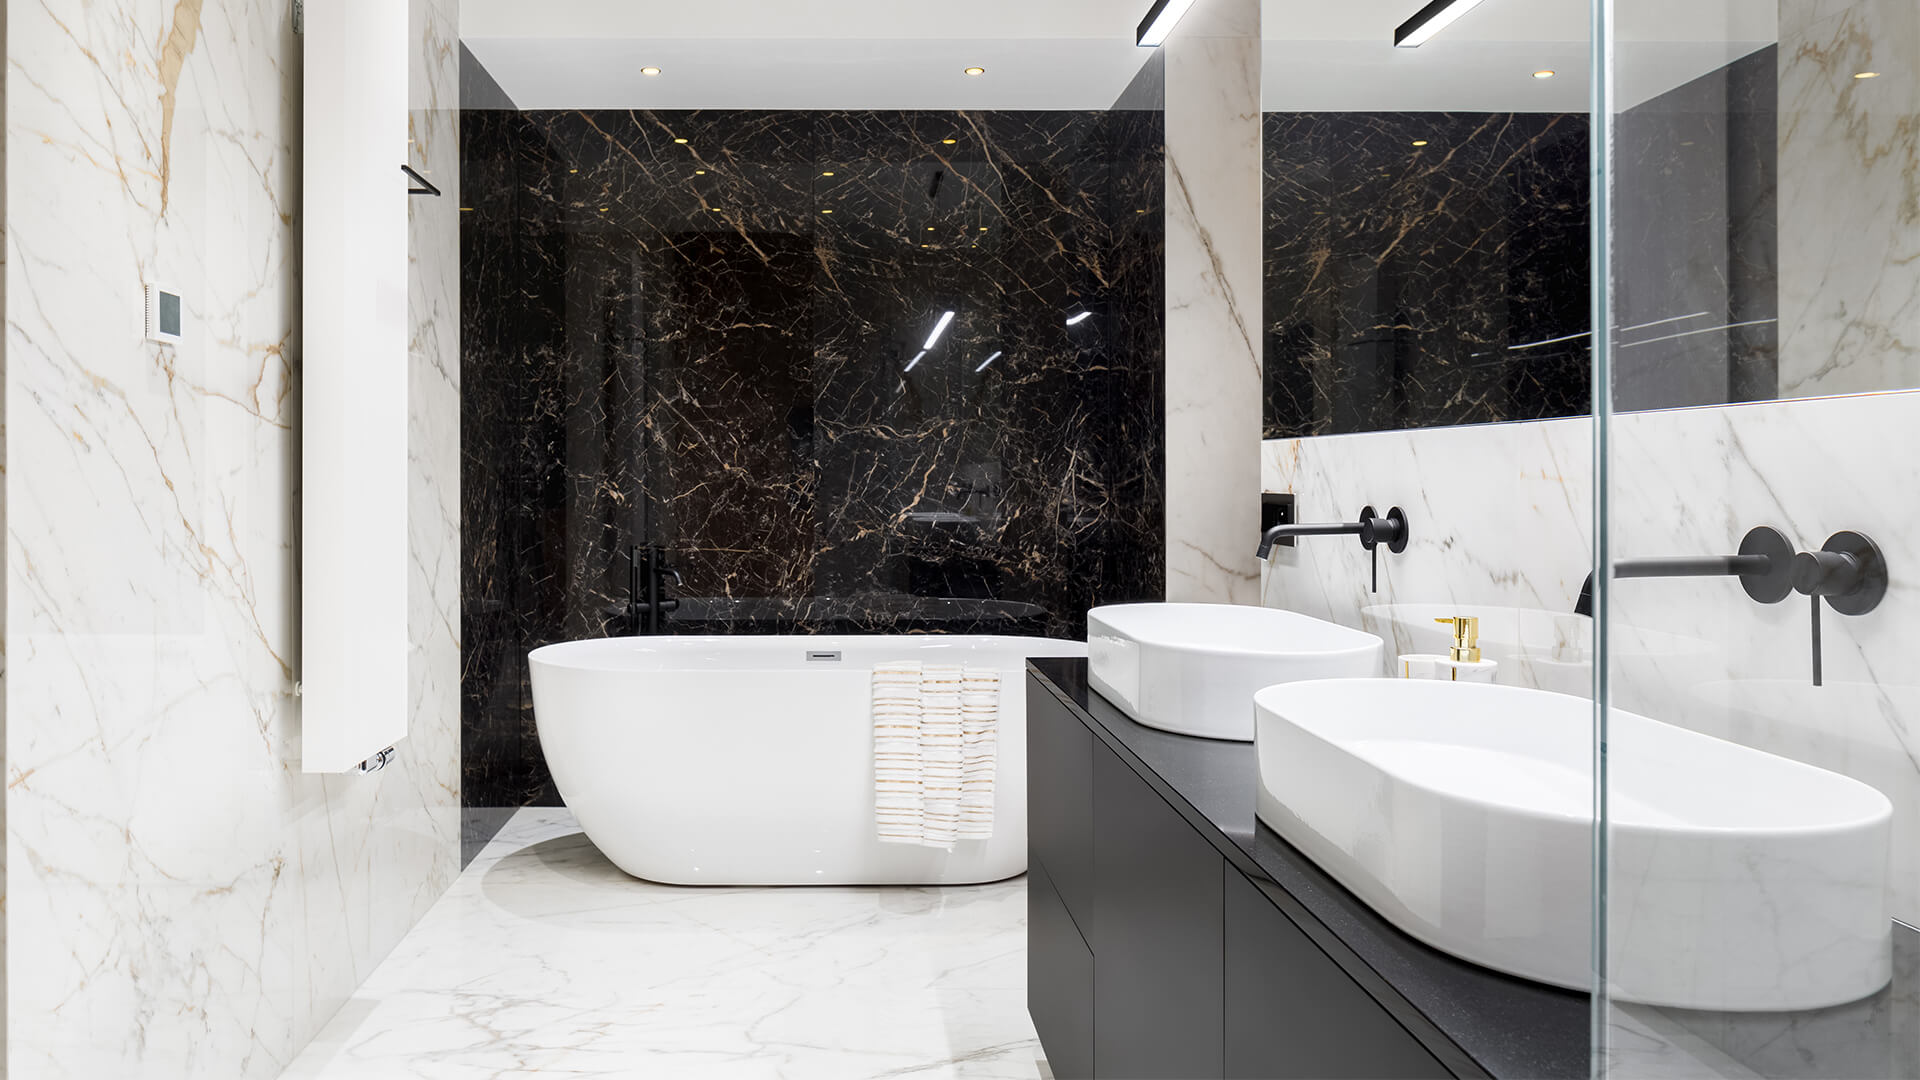 https://www.lux-review.com/wp-content/uploads/2020/02/luxury-bathroom.jpg